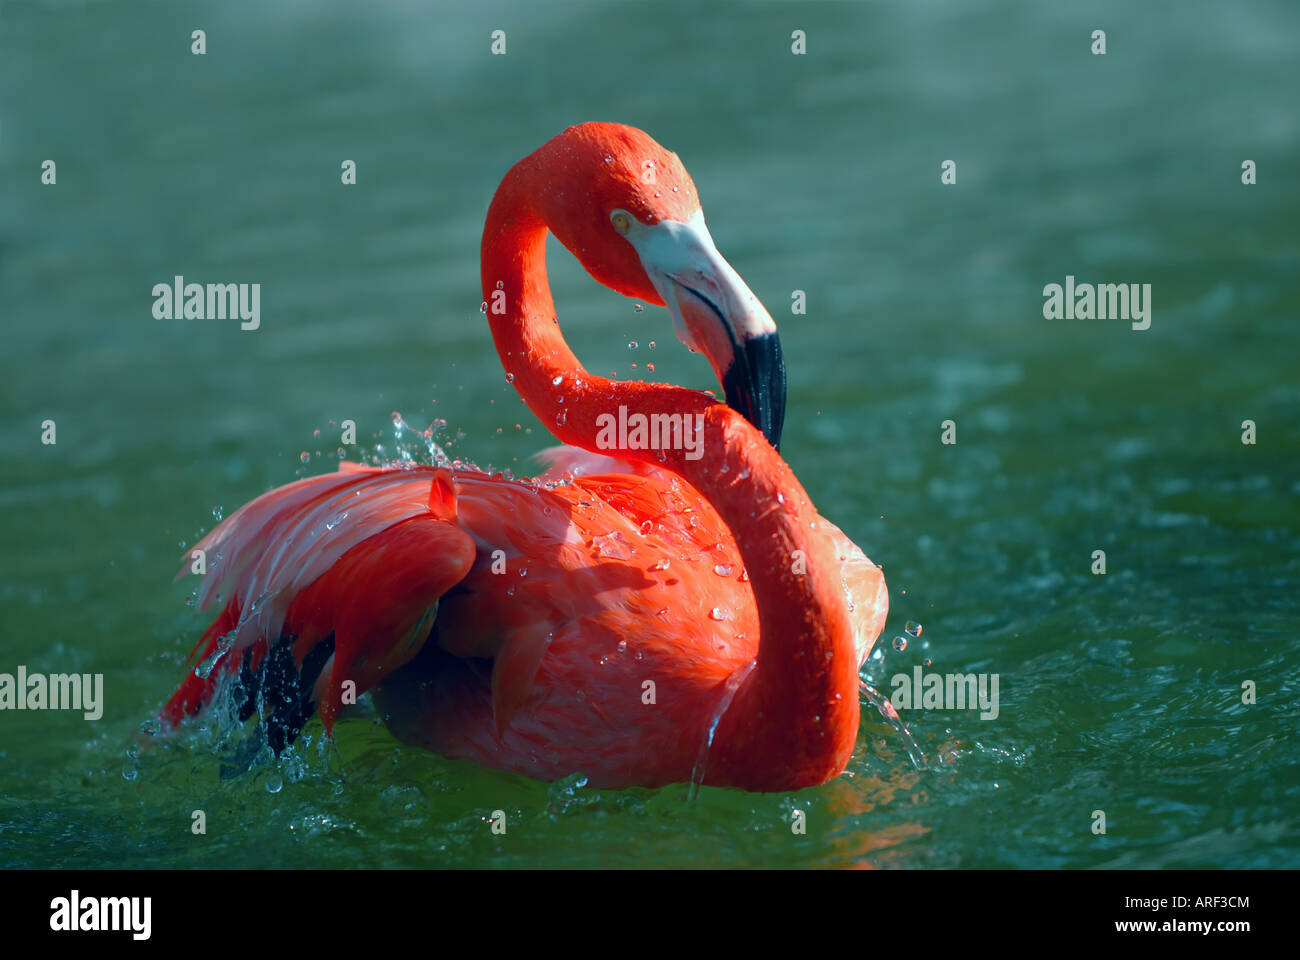 Flamingo's bath Stock Photo